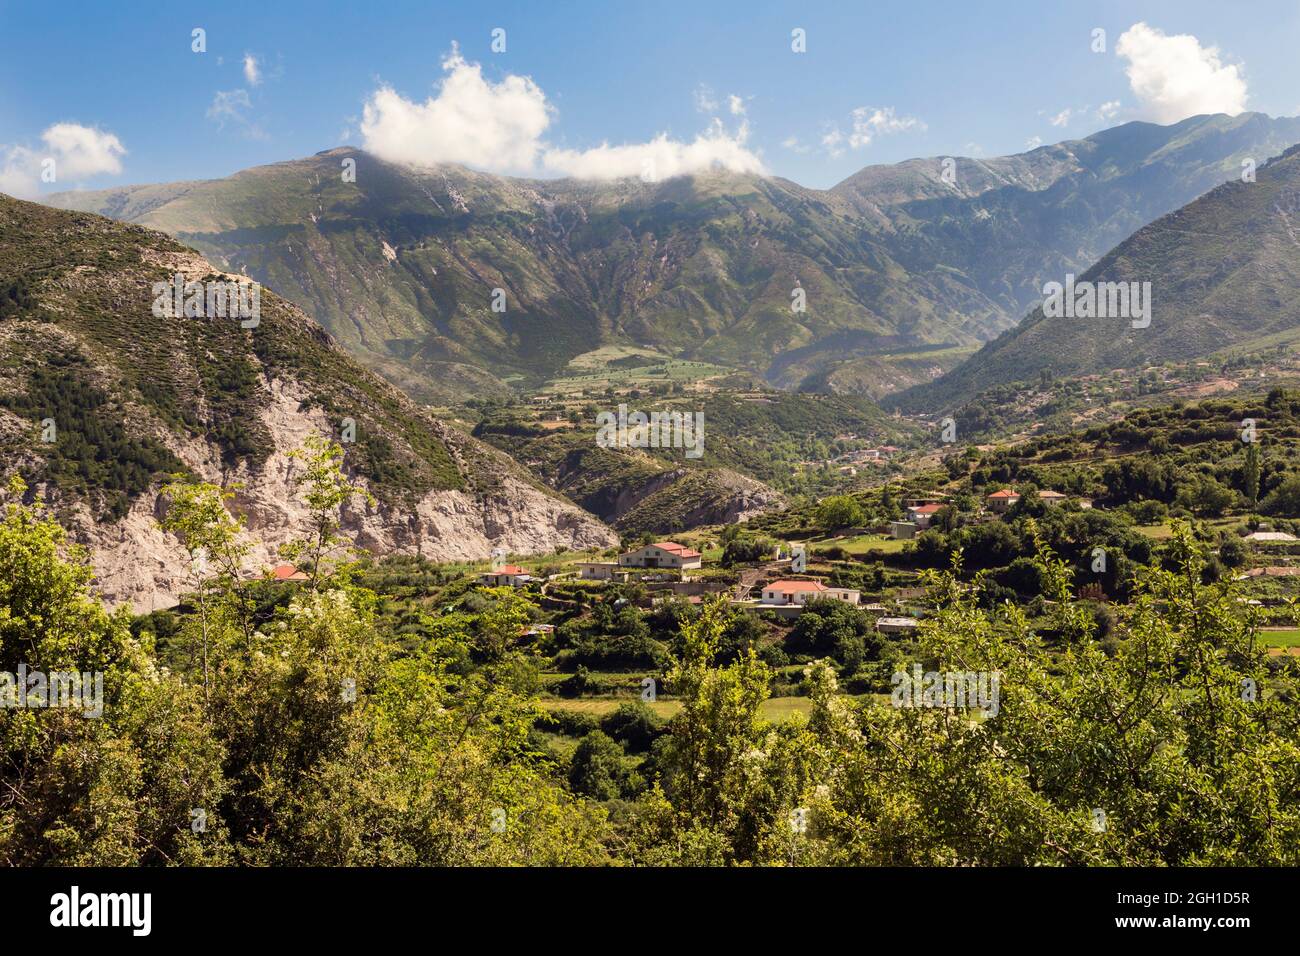 Albania. Landscape near Ducat. Farmland. Stock Photo